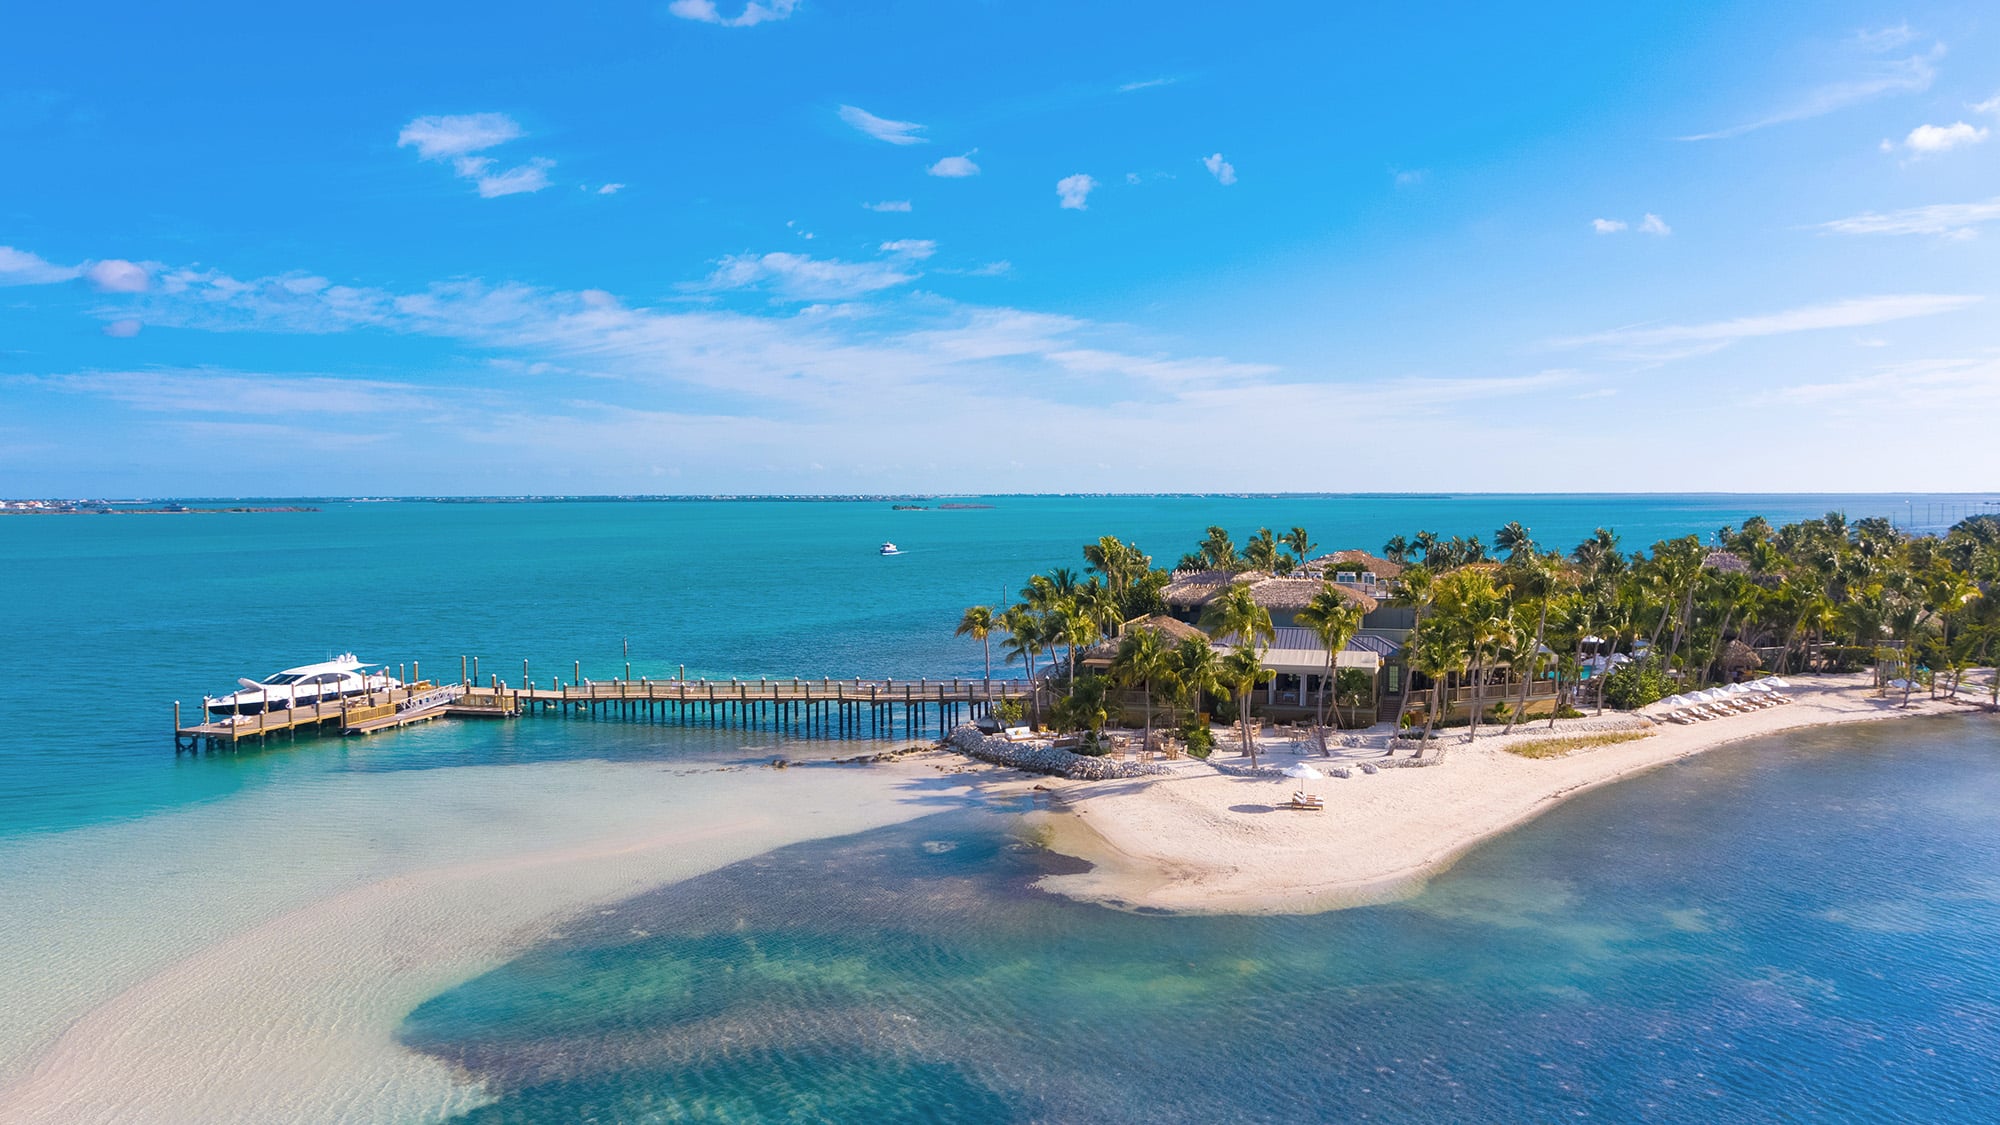 Introducing Little Palm Island Resort & Spa